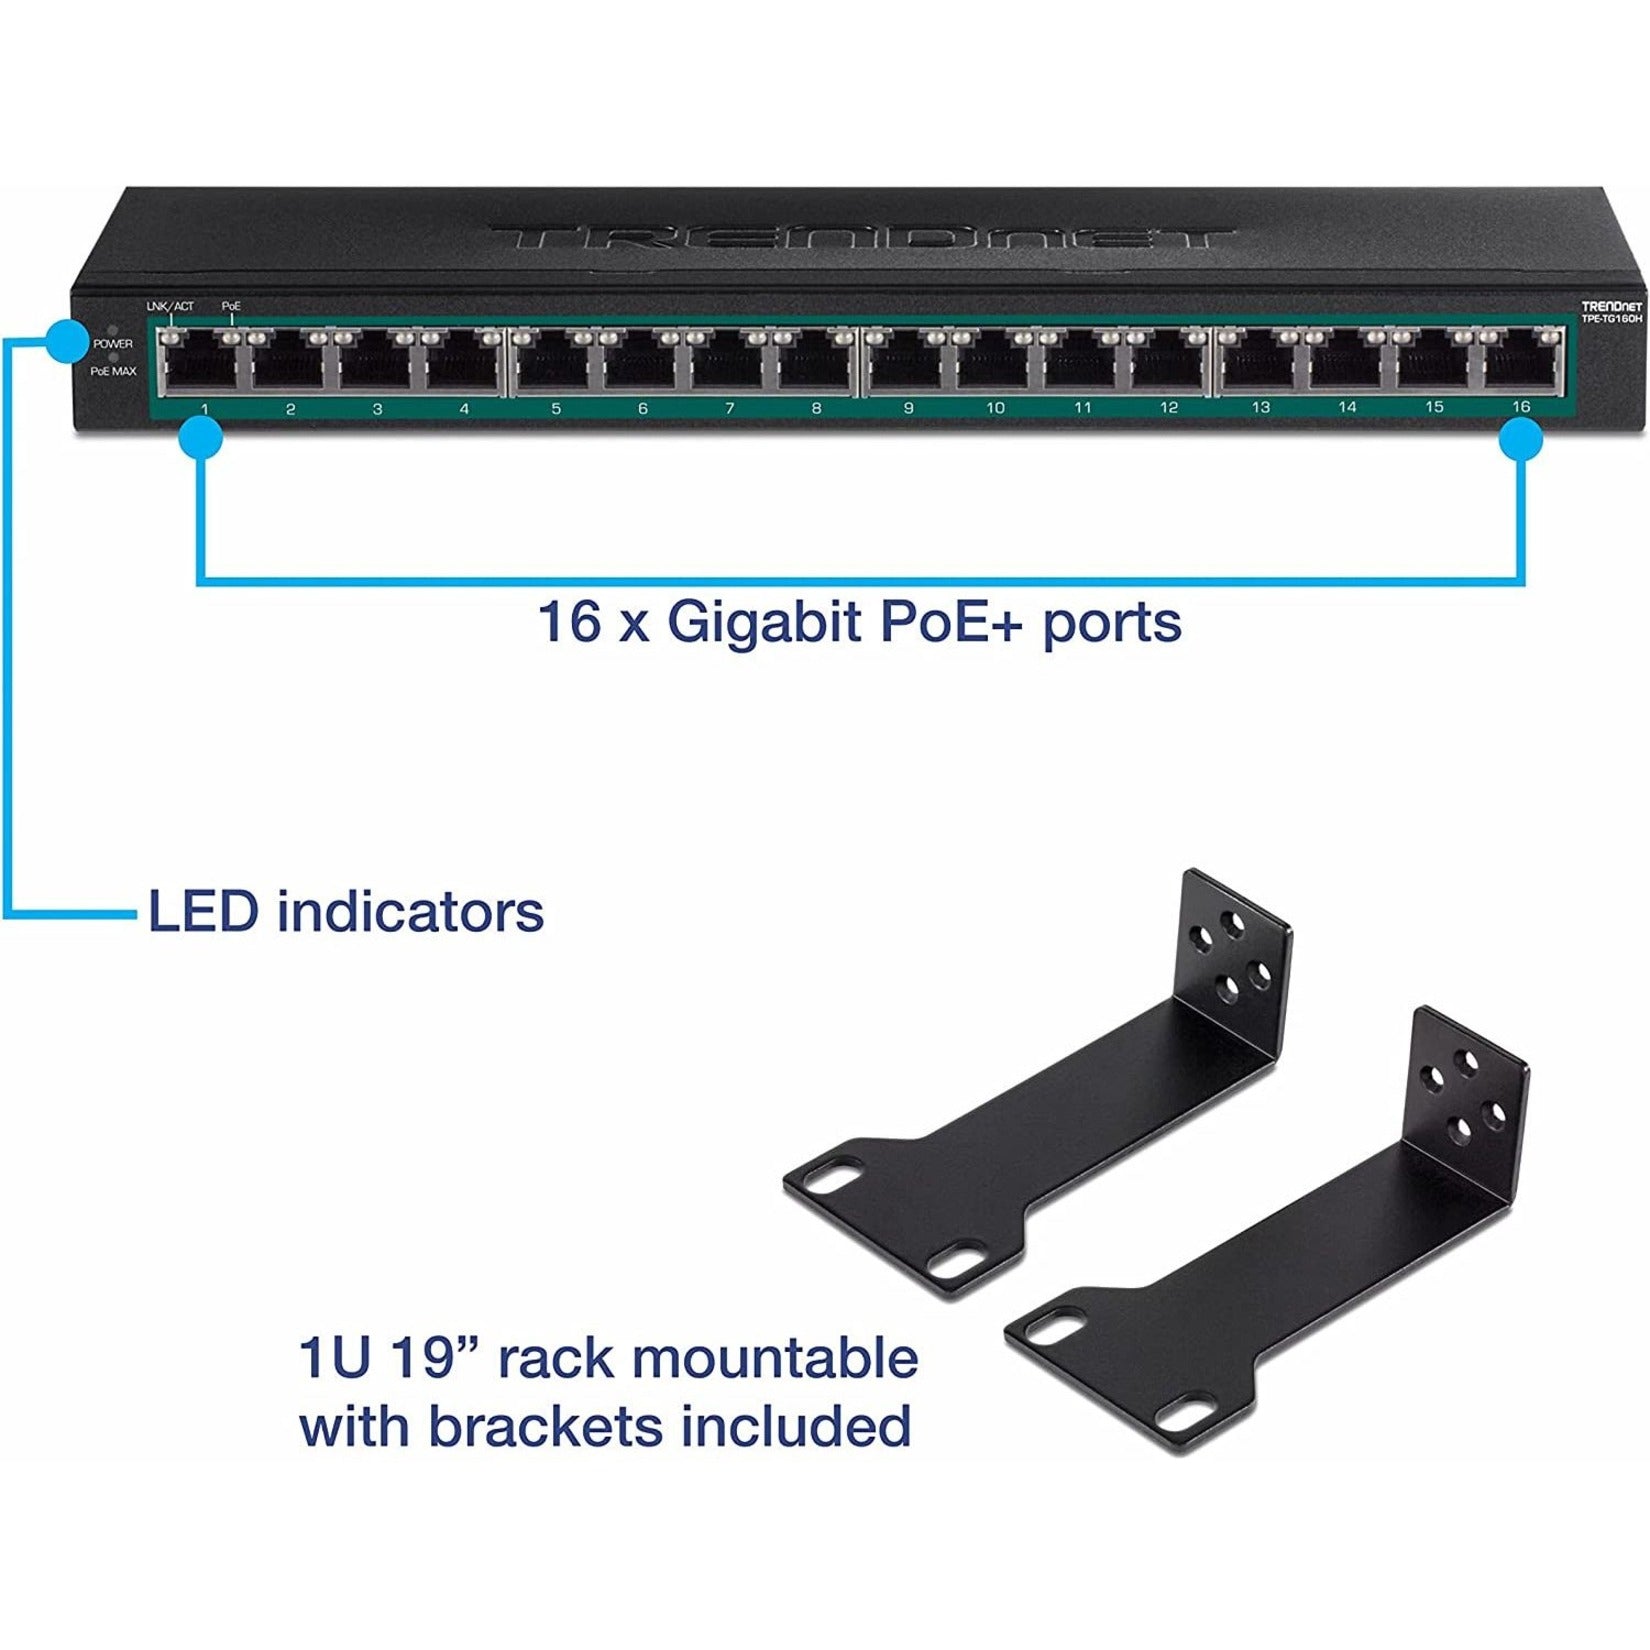 TRENDnet TPE-TG160H Ethernet Switch, 16-Port Gigabit PoE+, 123W PoE Power Budget